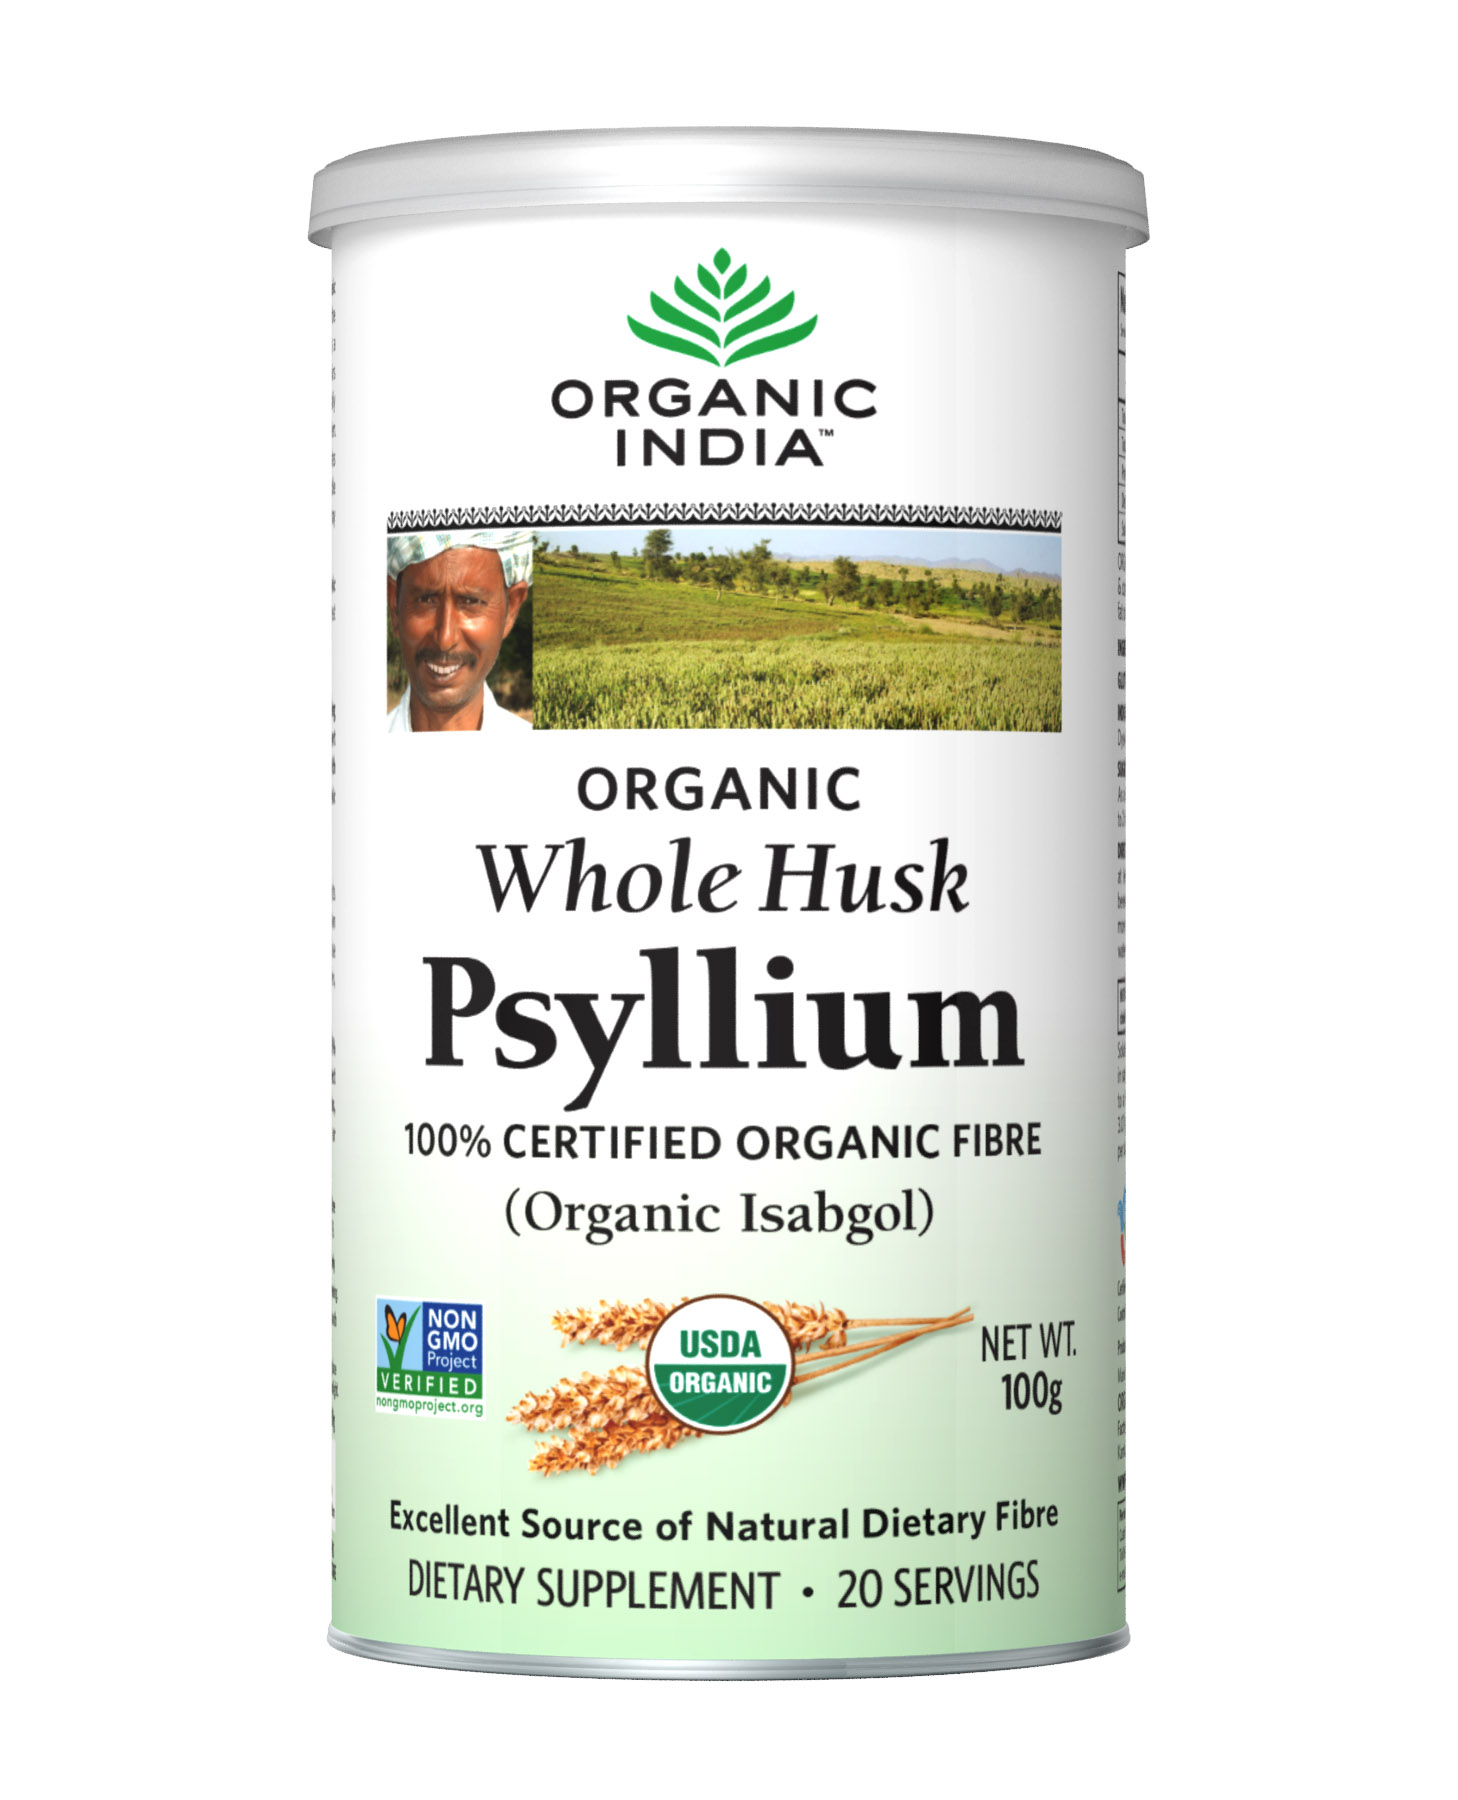 Buy Organic India Psyllium Husk at Best Price Online